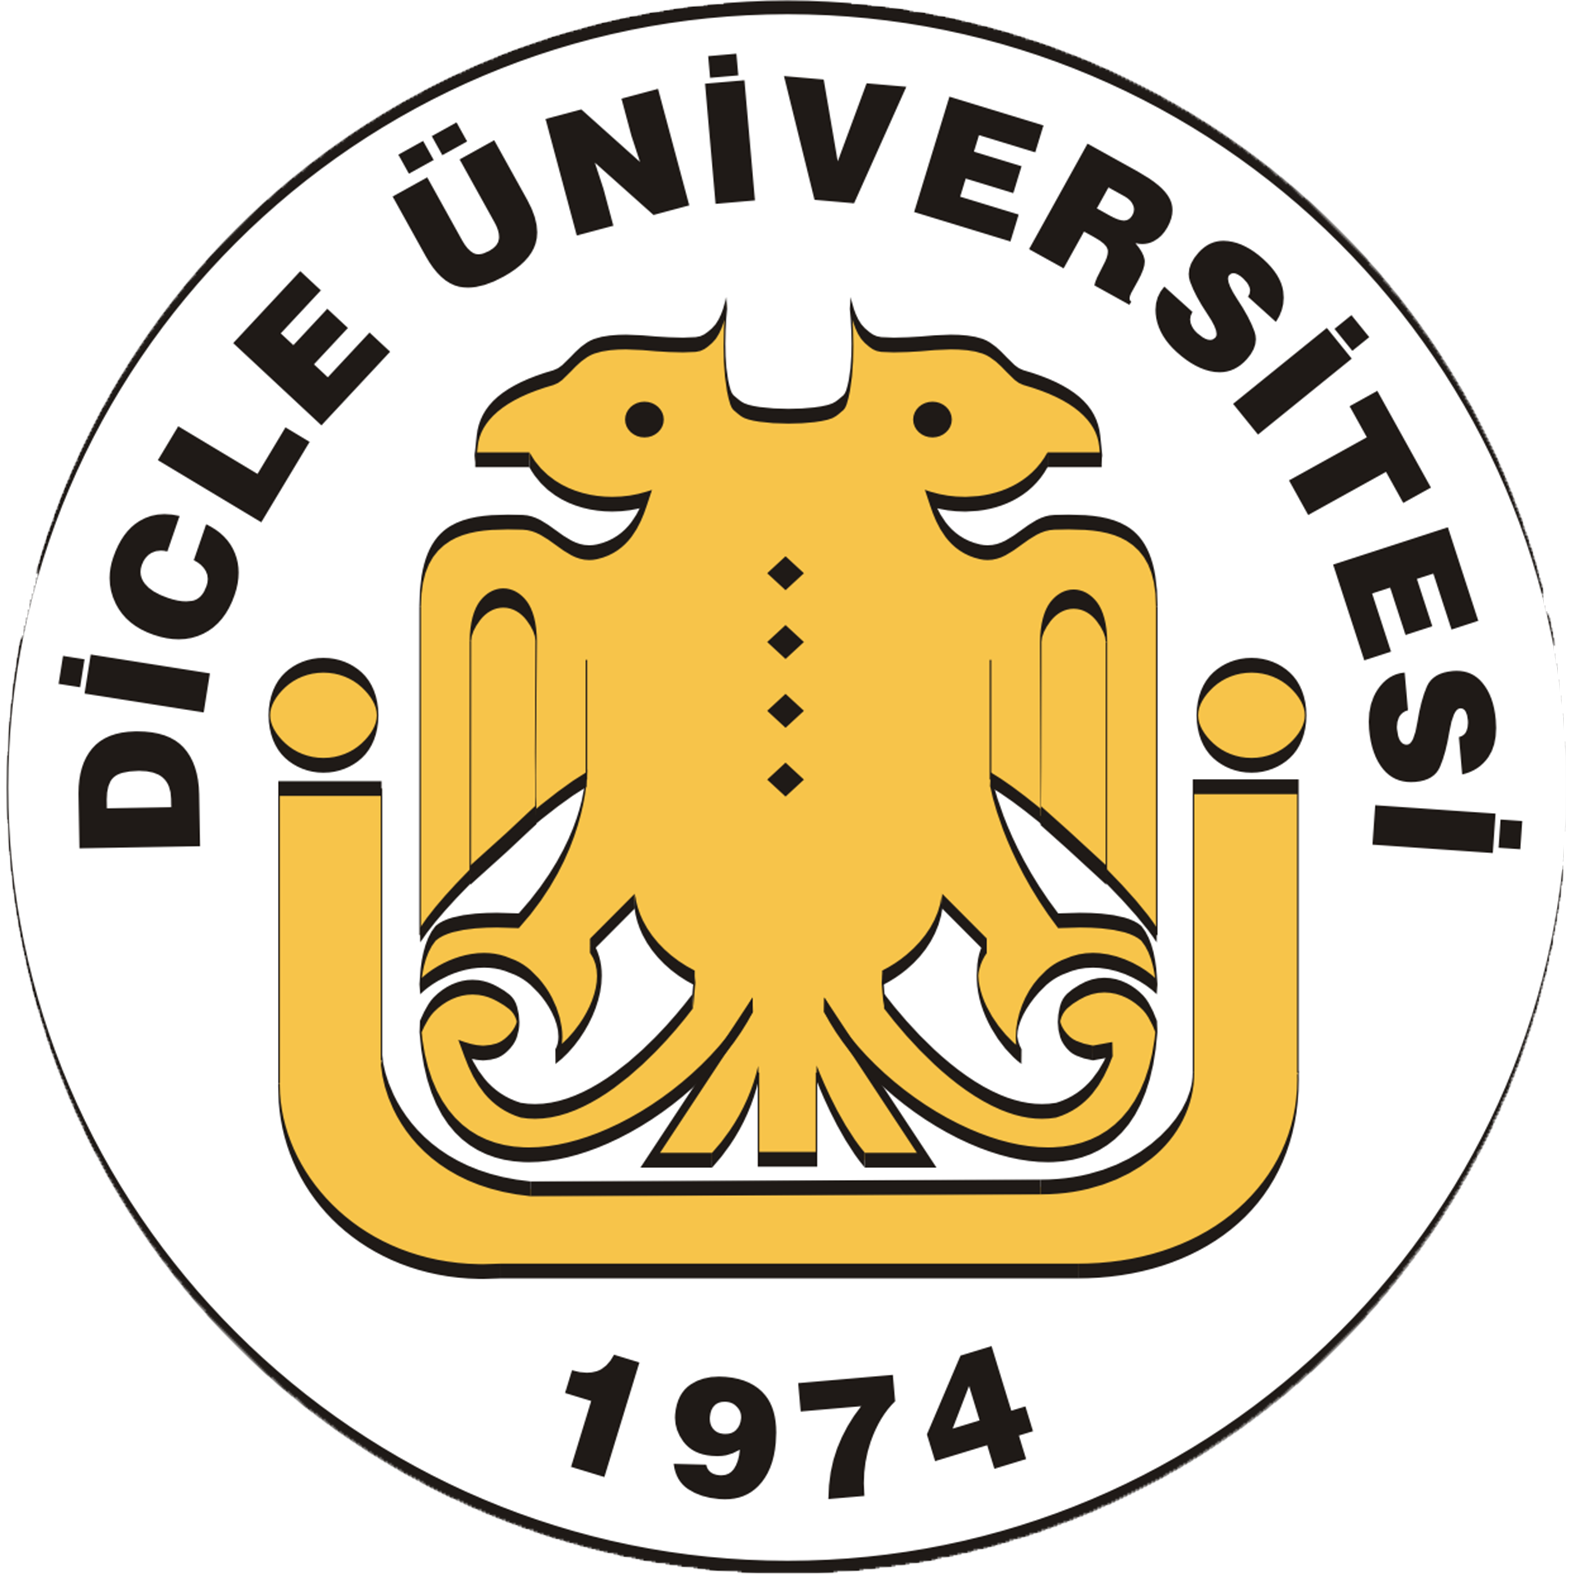 dicle_universitesi_logo-copy.png